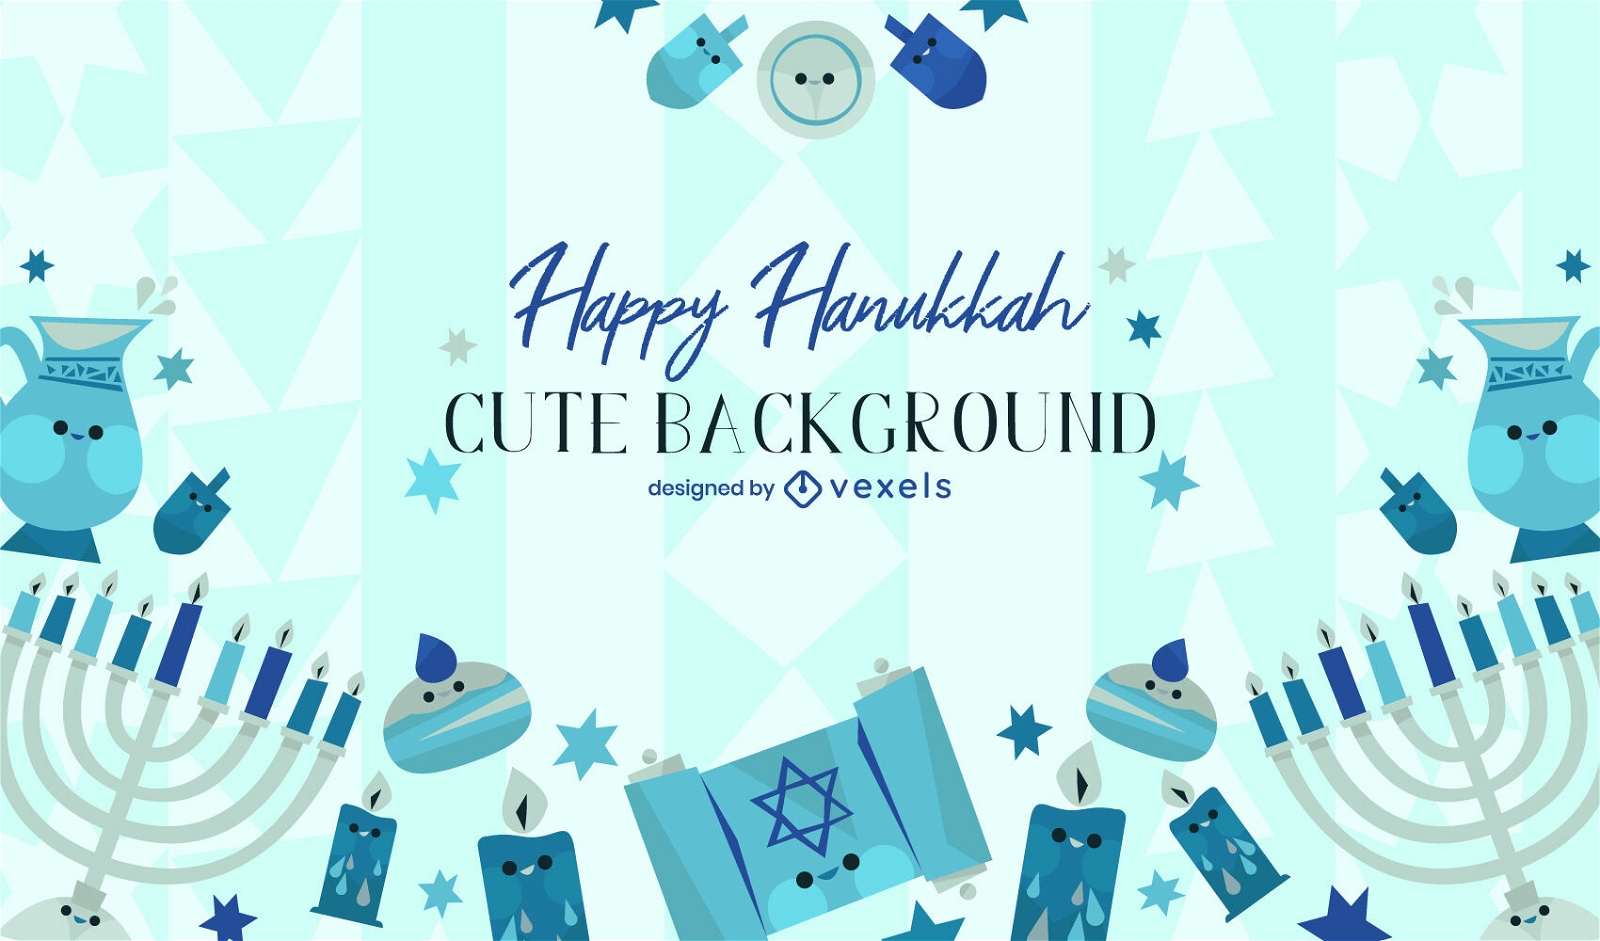 Happy Hanukkah wallpaper | Happy hanukkah, Happy hanukkah images, Happy  hannukah